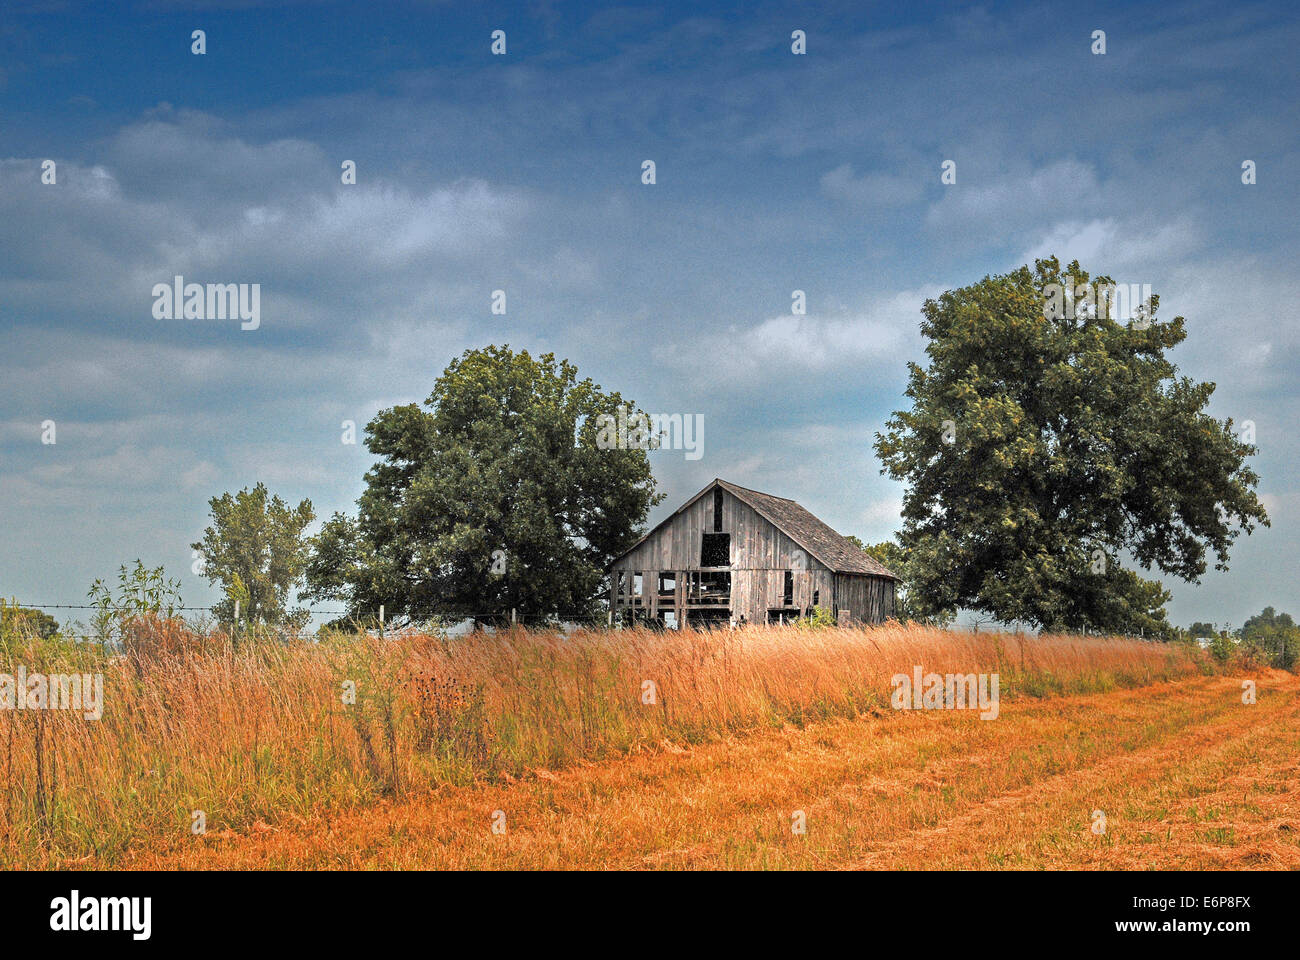 USA, Missouri barn and field. Stock Photo